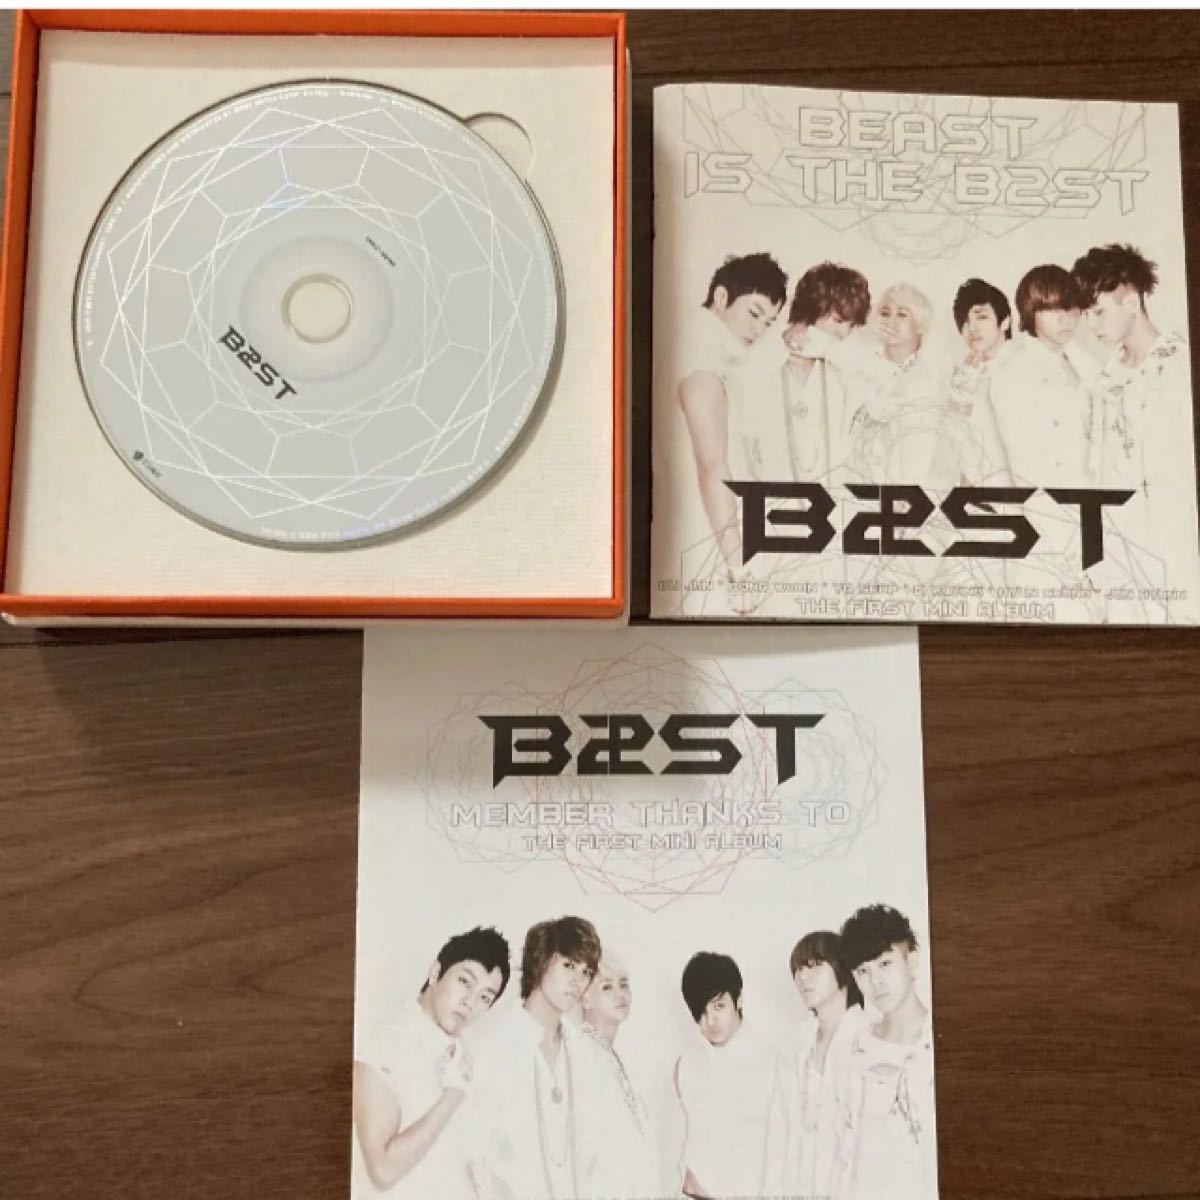 BEAST 1st mini album-BEAST IS THE B2ST